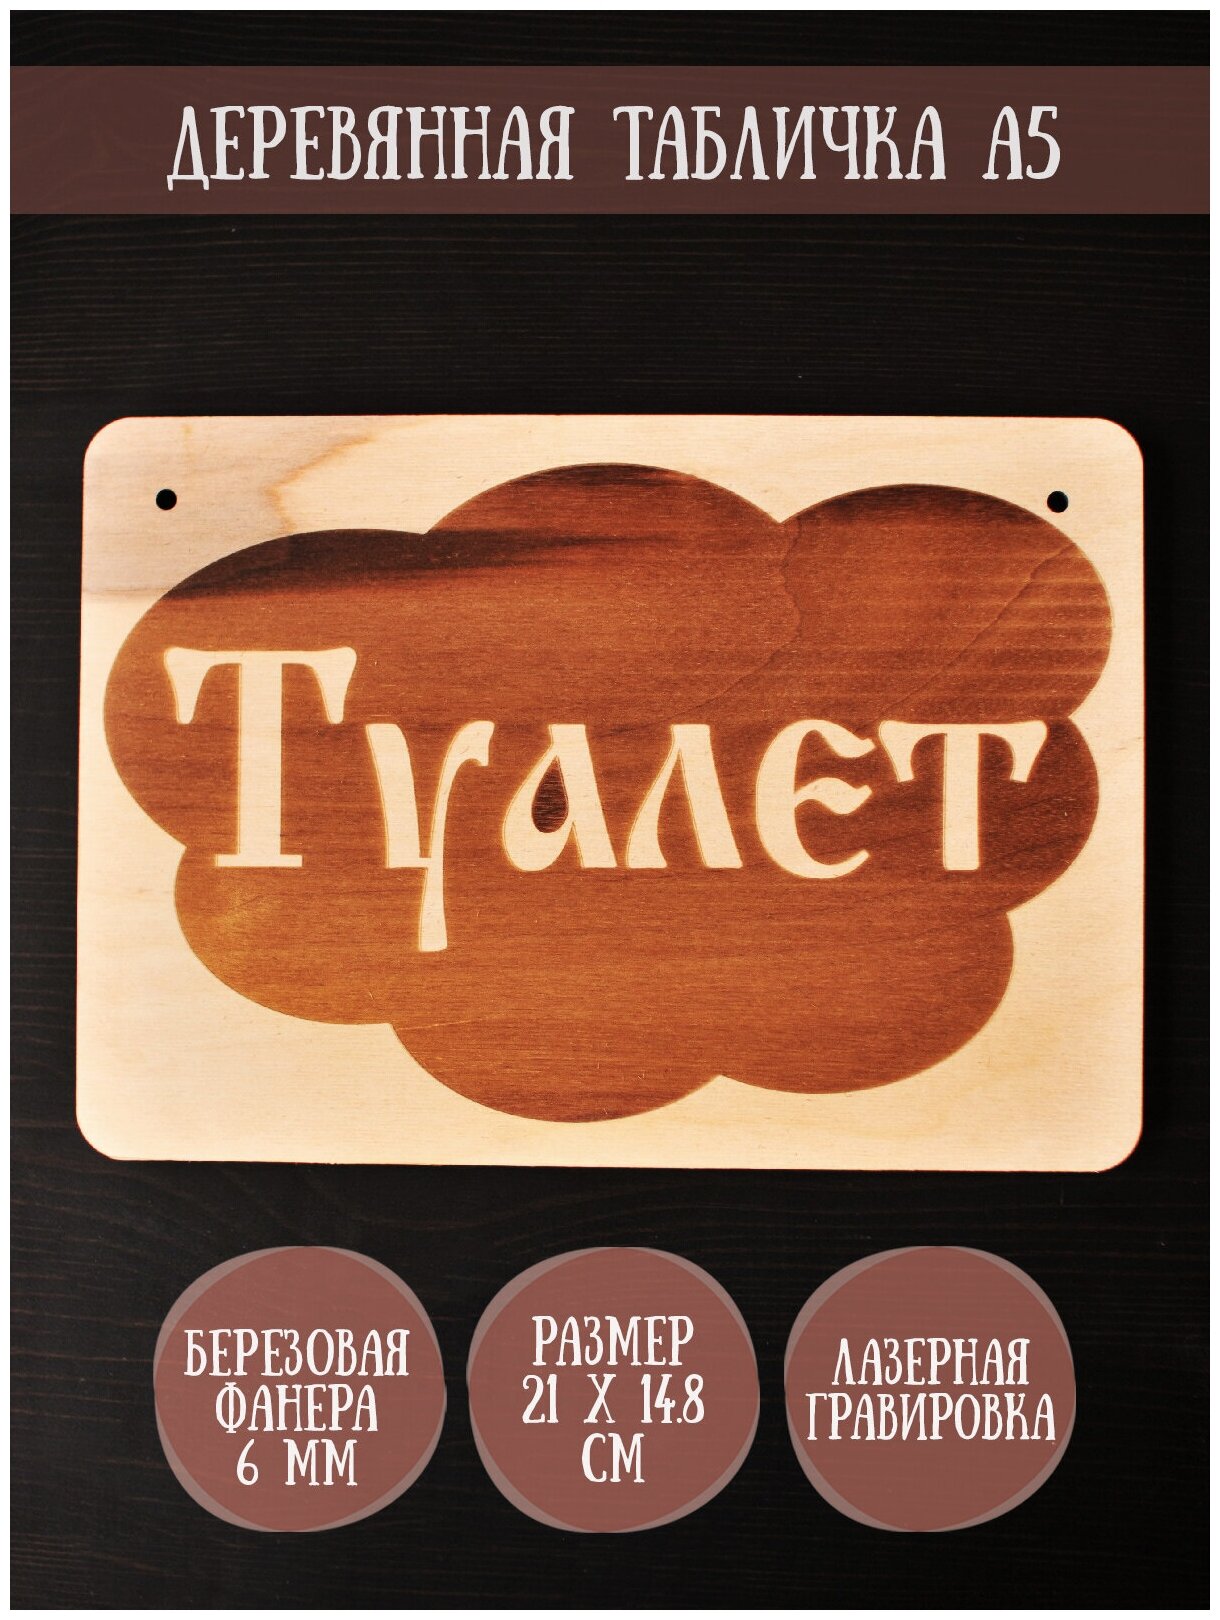 Табличка для бани RiForm "Туалет" формат А5 (21 х 14.8 см) березовая фанера 6 мм